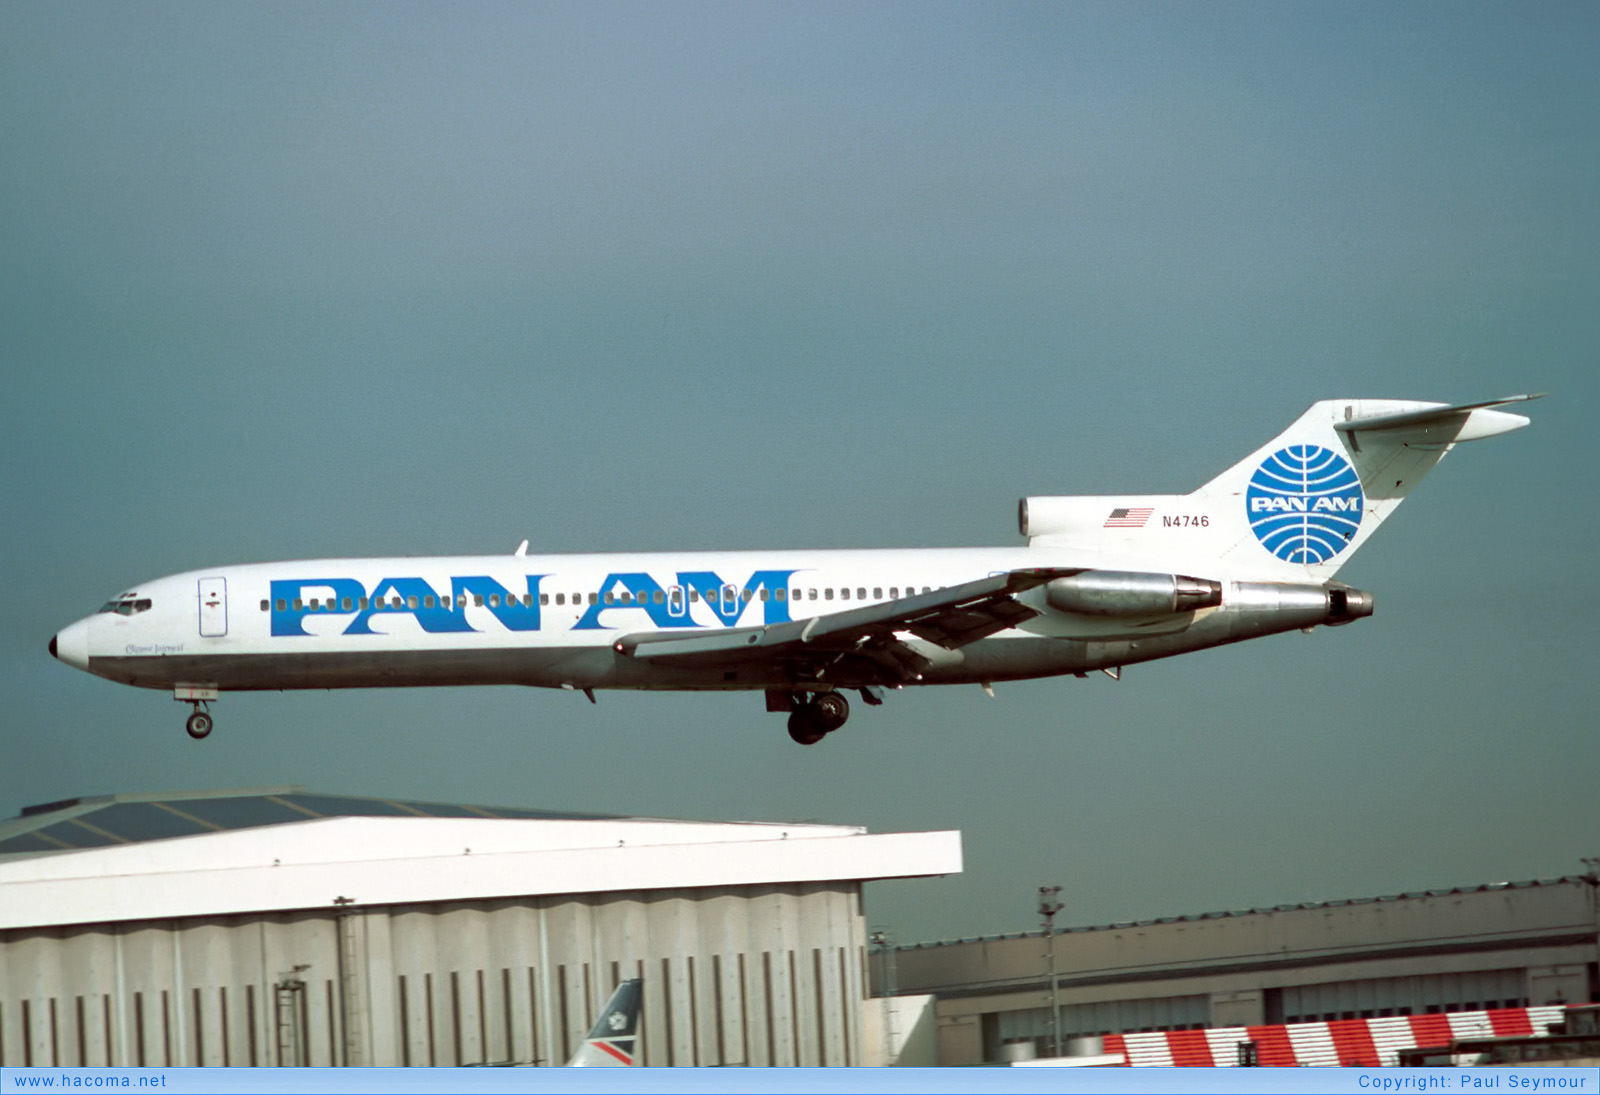 Photo of N4746 - Pan Am Clipper Intrepid - London Heathrow Airport - Jul 28, 1990